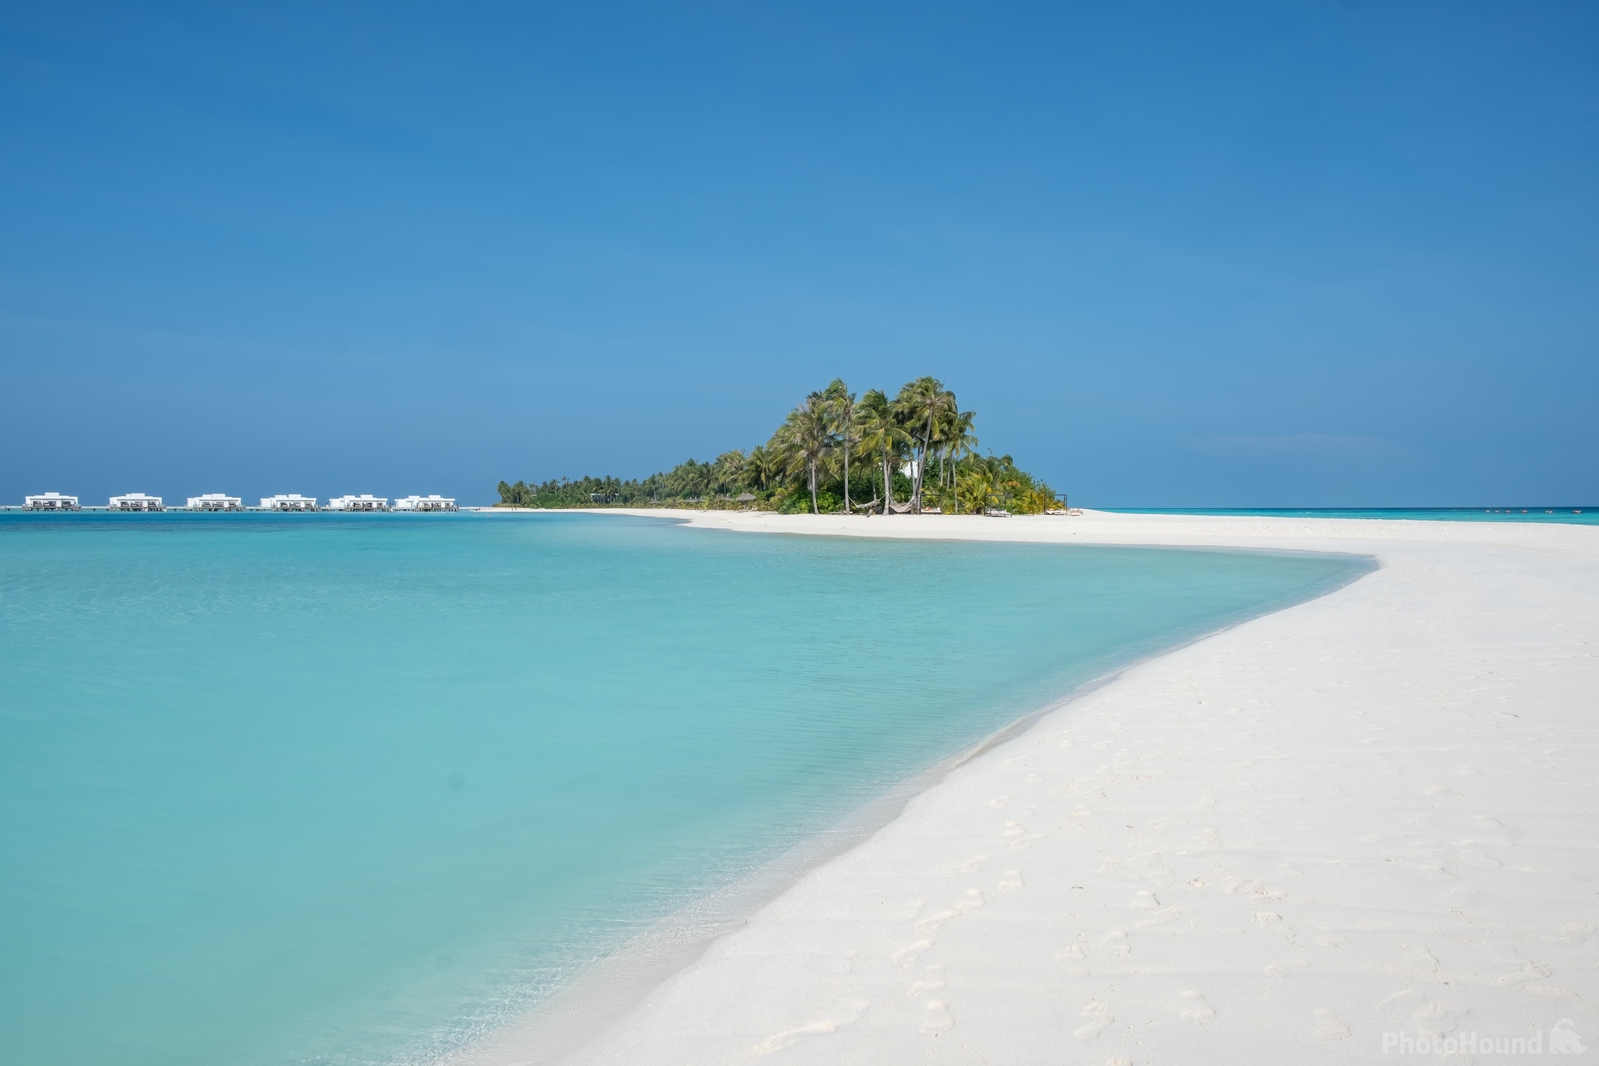 Image of Royal Island, Maldives by Dave Holdham